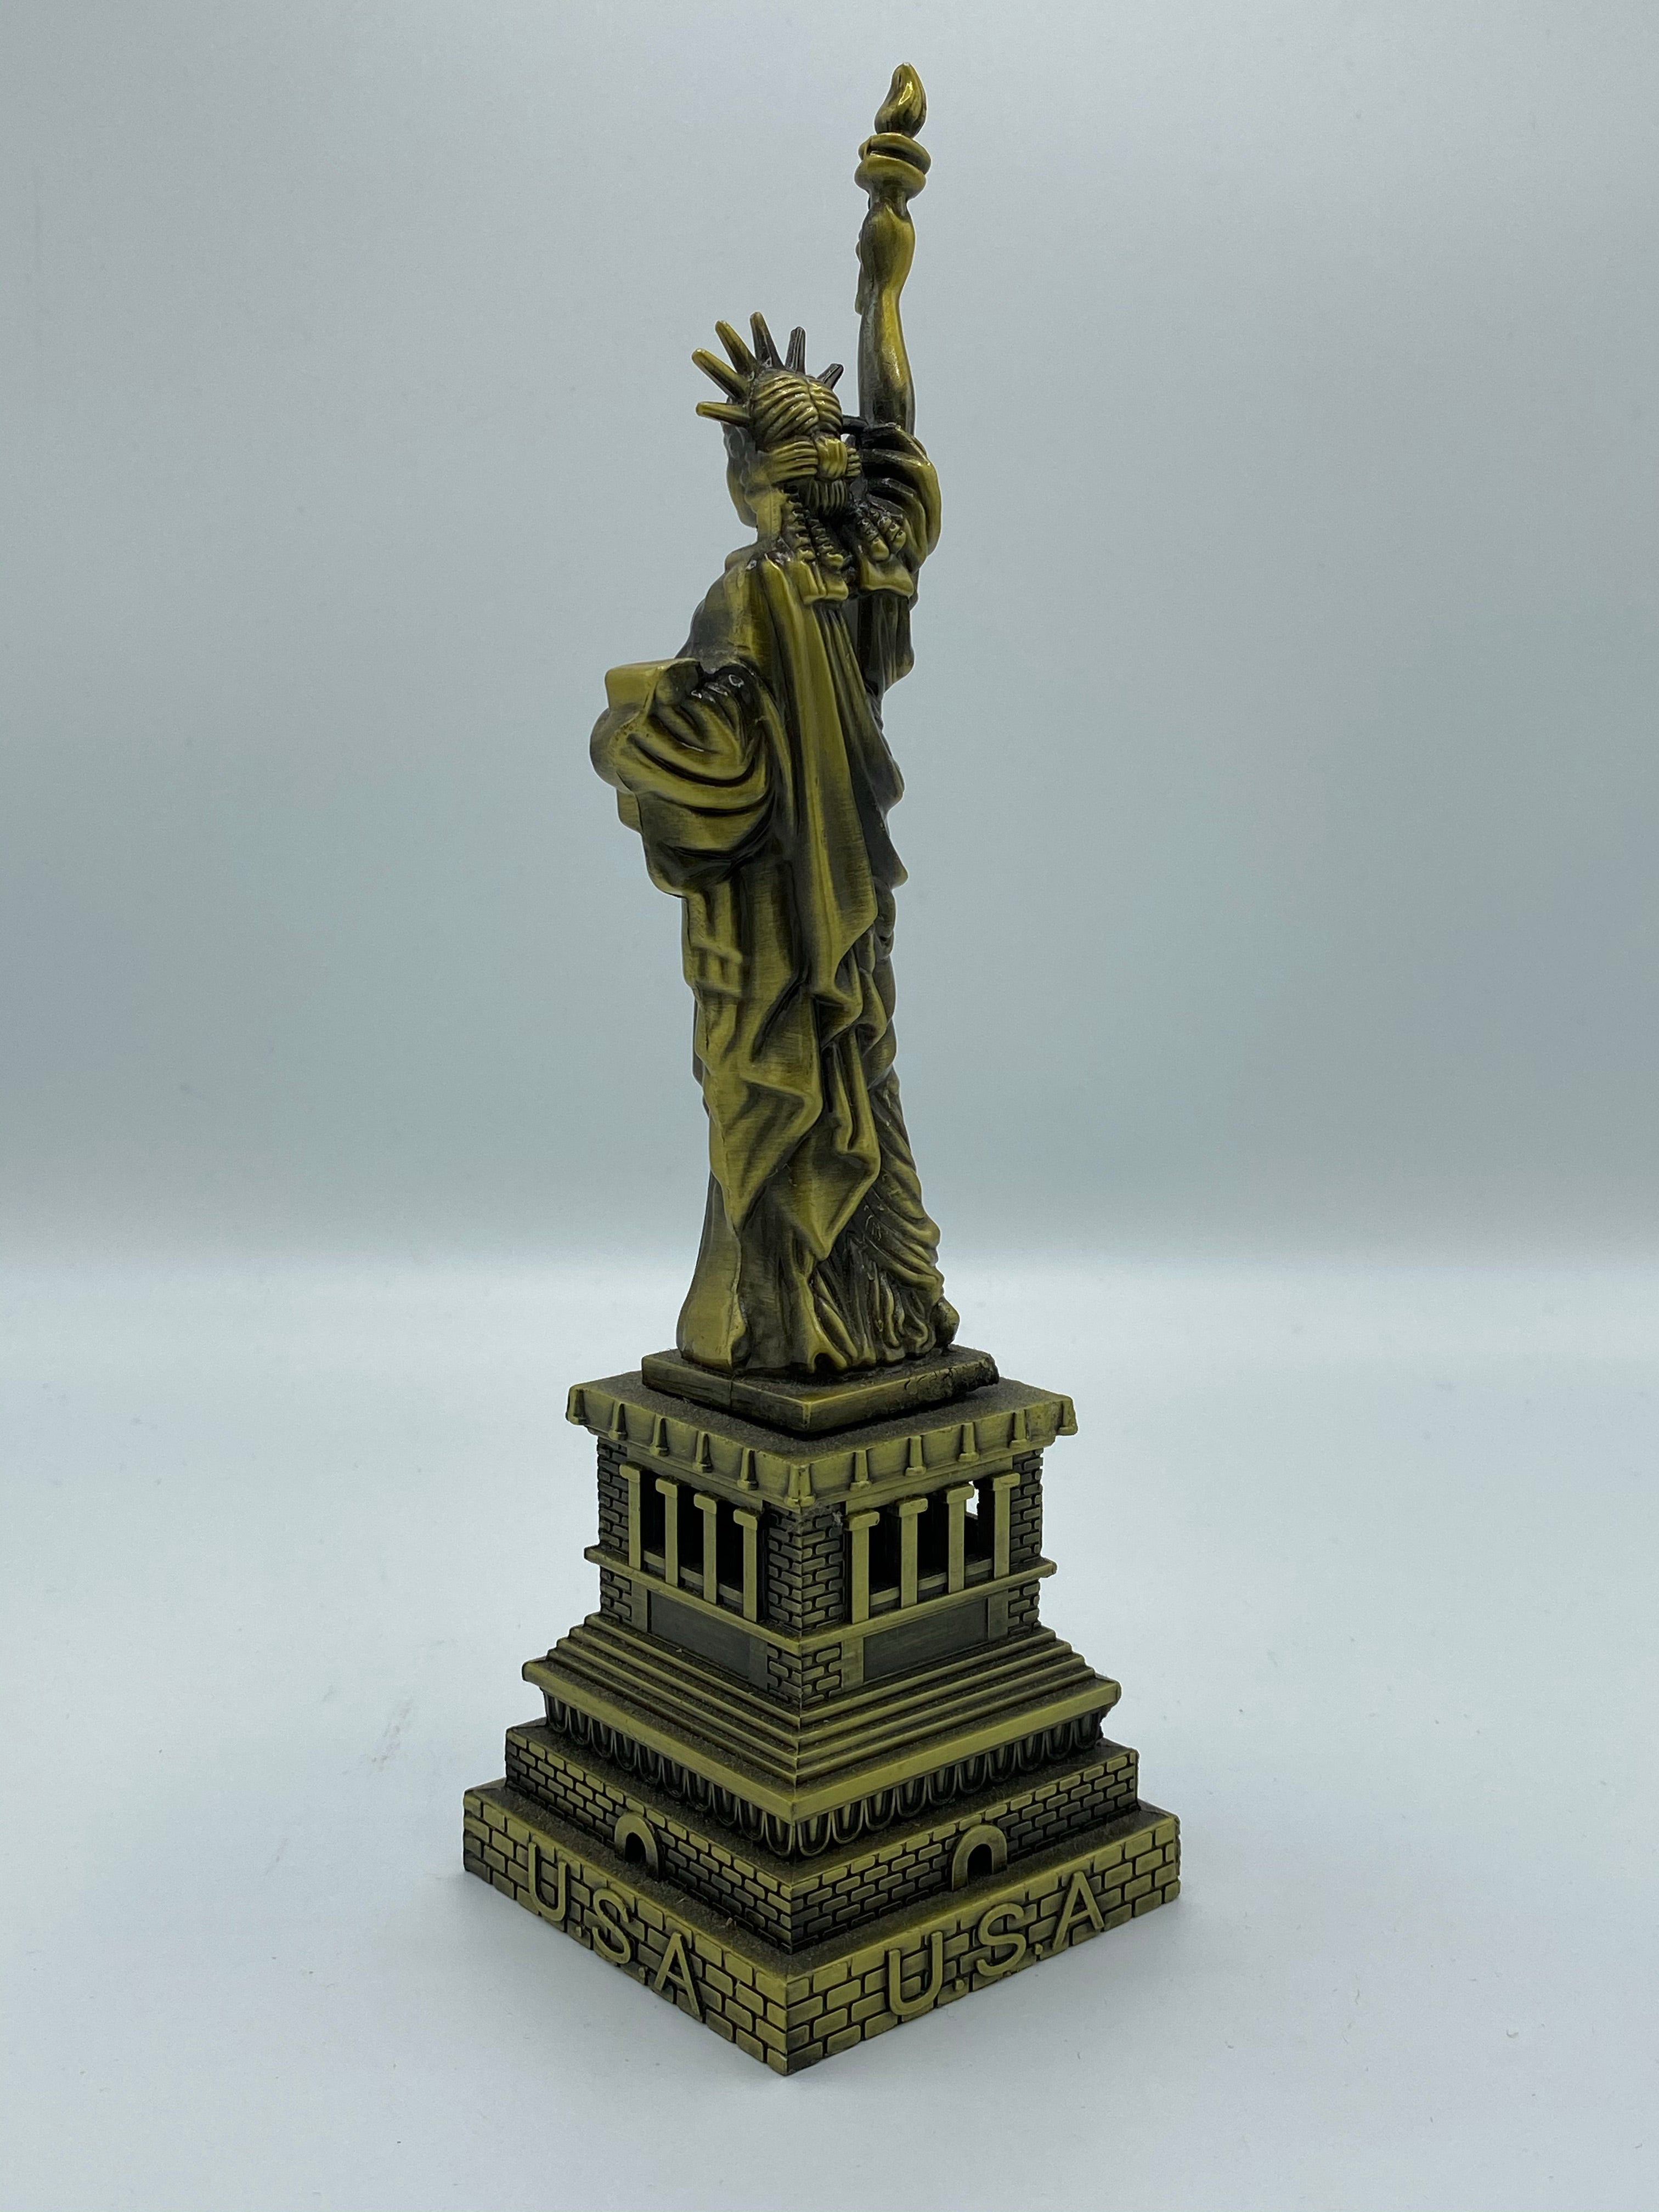 USA Statue of Liberty figurine